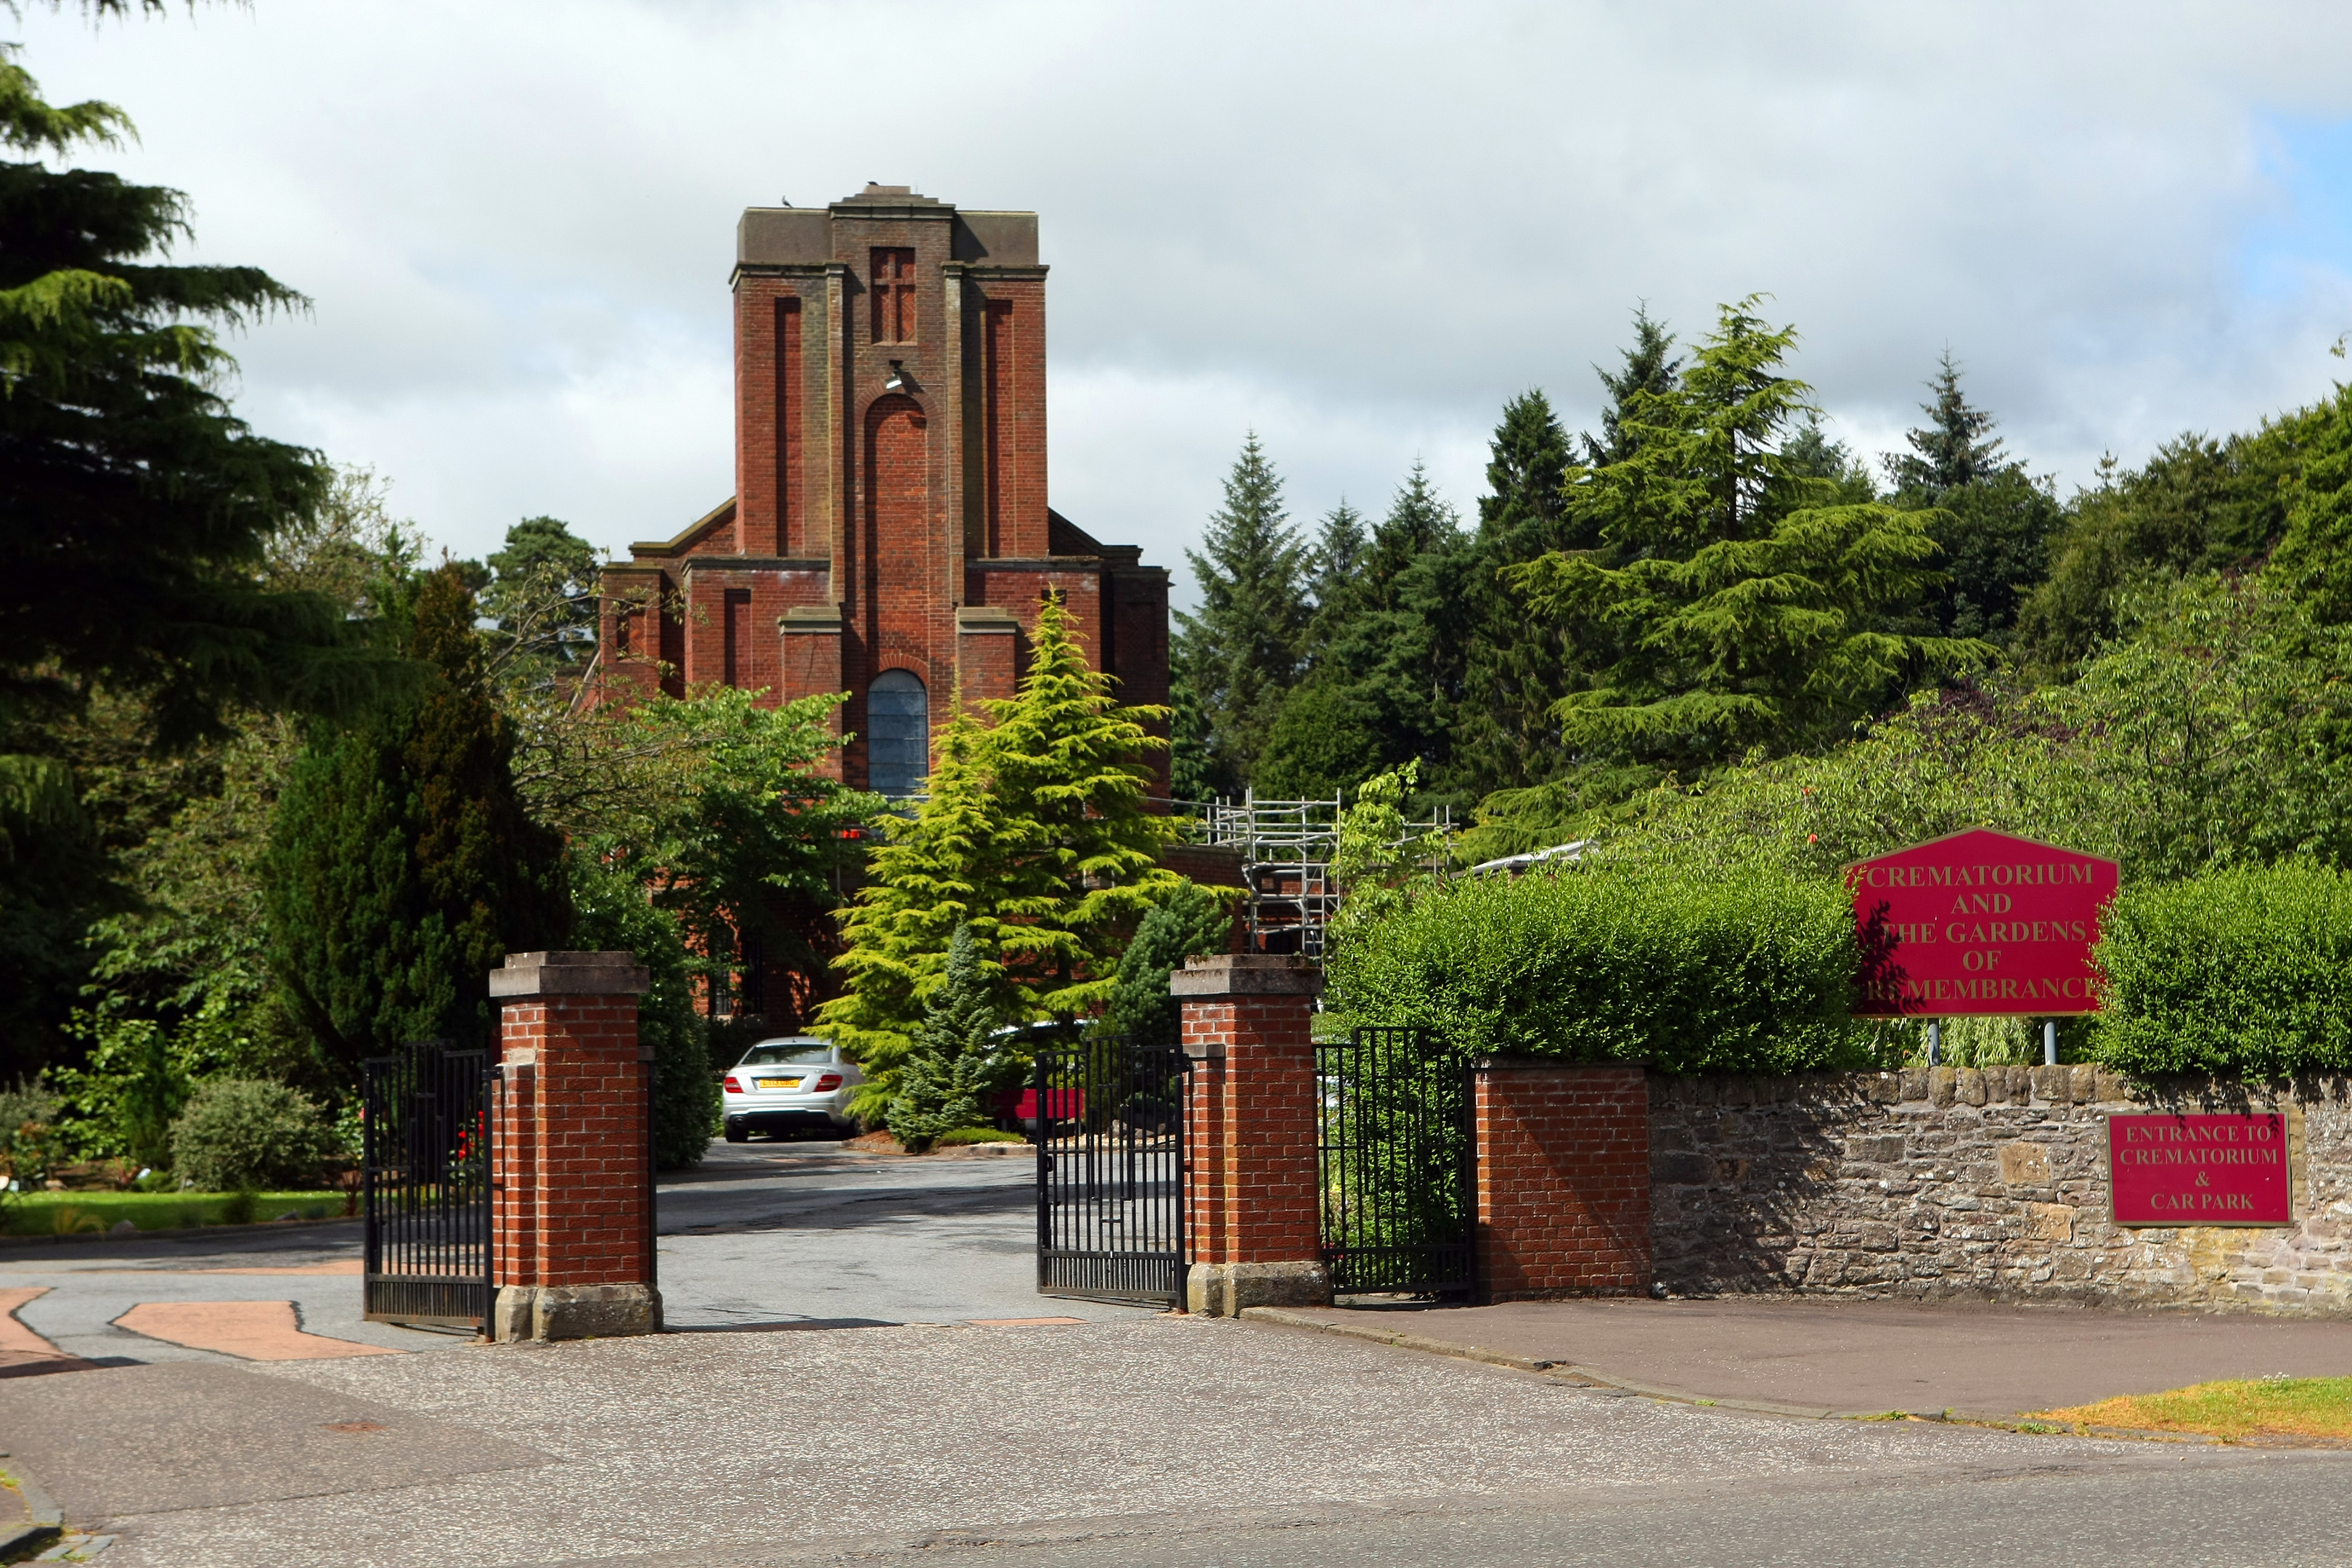 Dundee Crematorium on Macalpine Road.